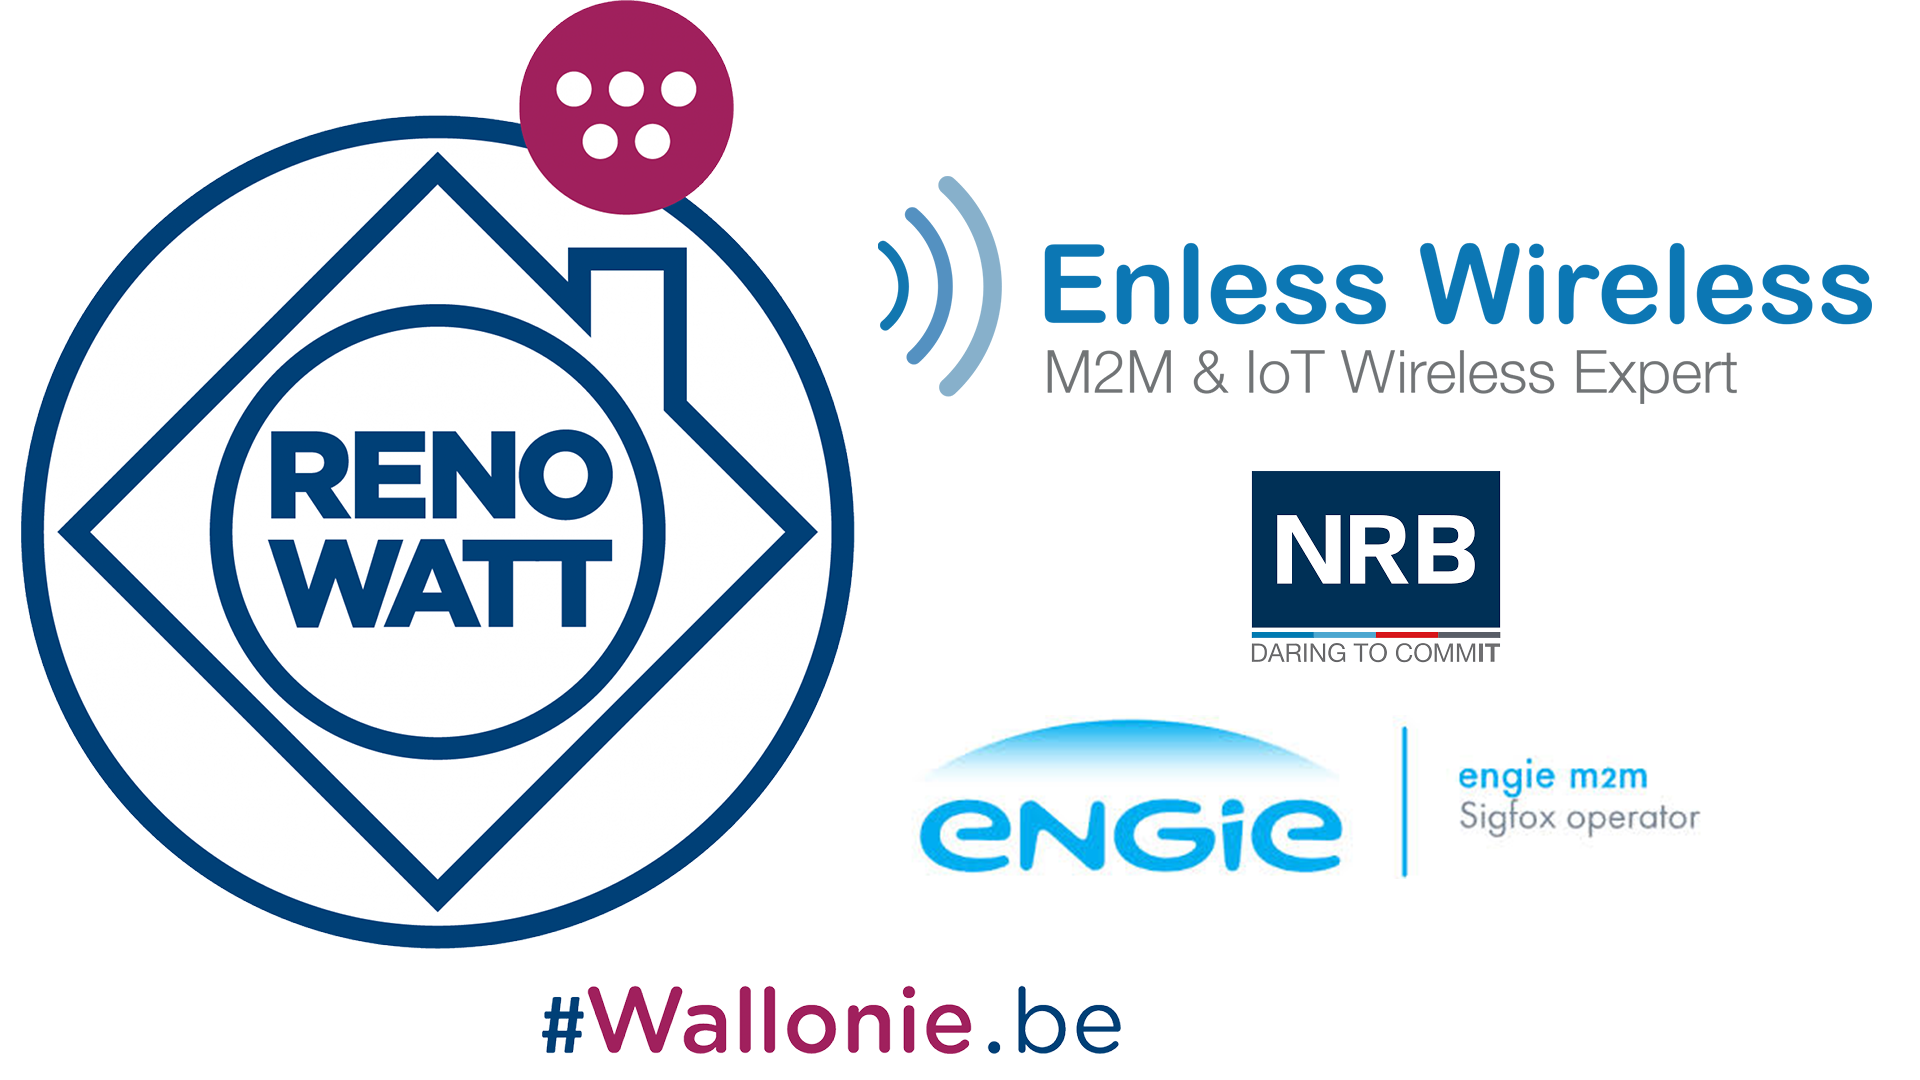 Mission RenoWatt Wallonie - Enless Wireless Engie M2M NRB